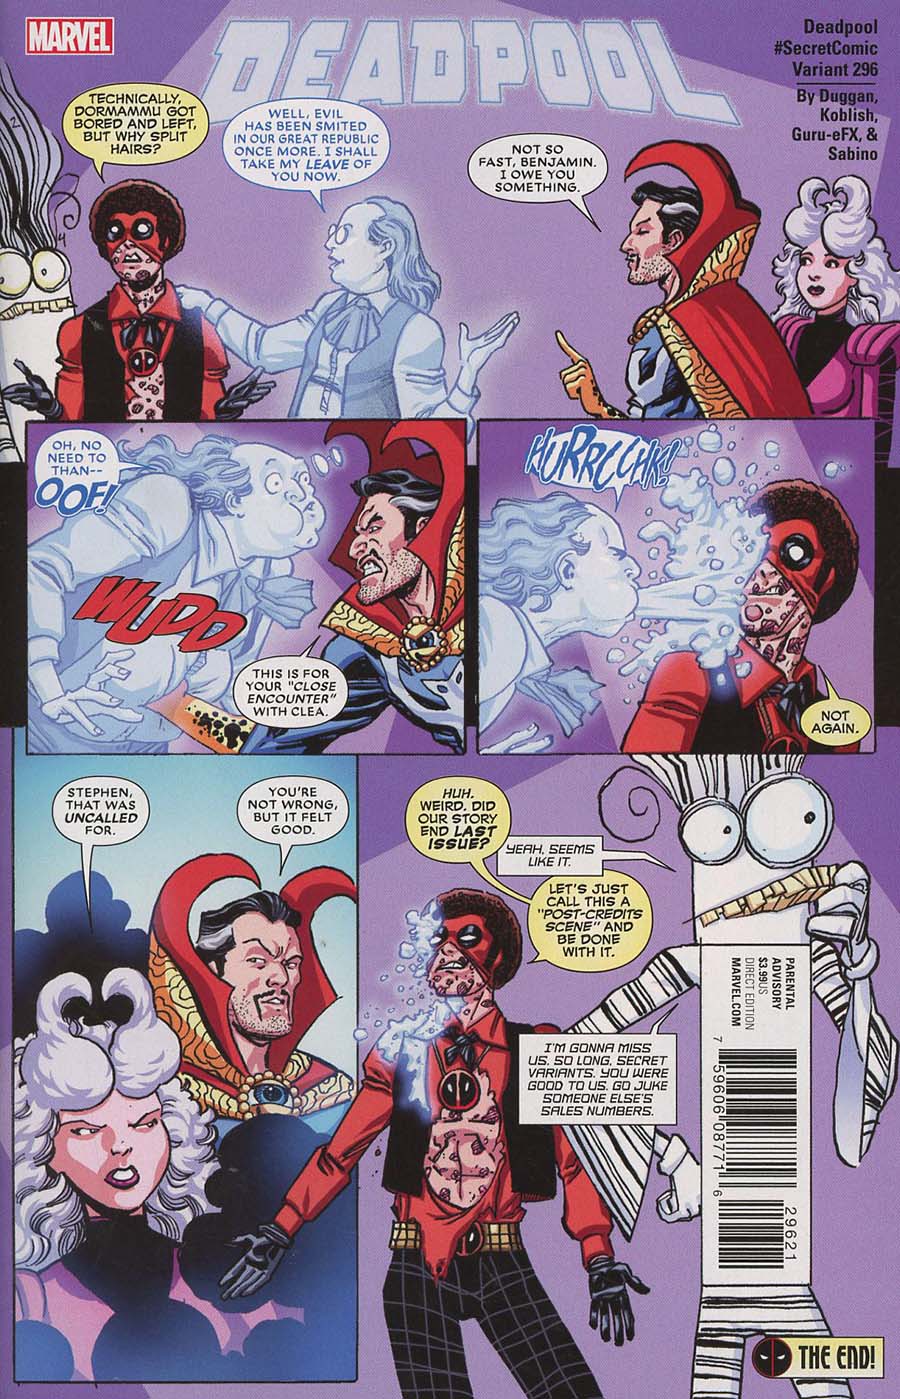 Despicable Deadpool #296 Cover B Variant Scott Koblish Secret Comics Cover (Marvel Legacy Tie-In)